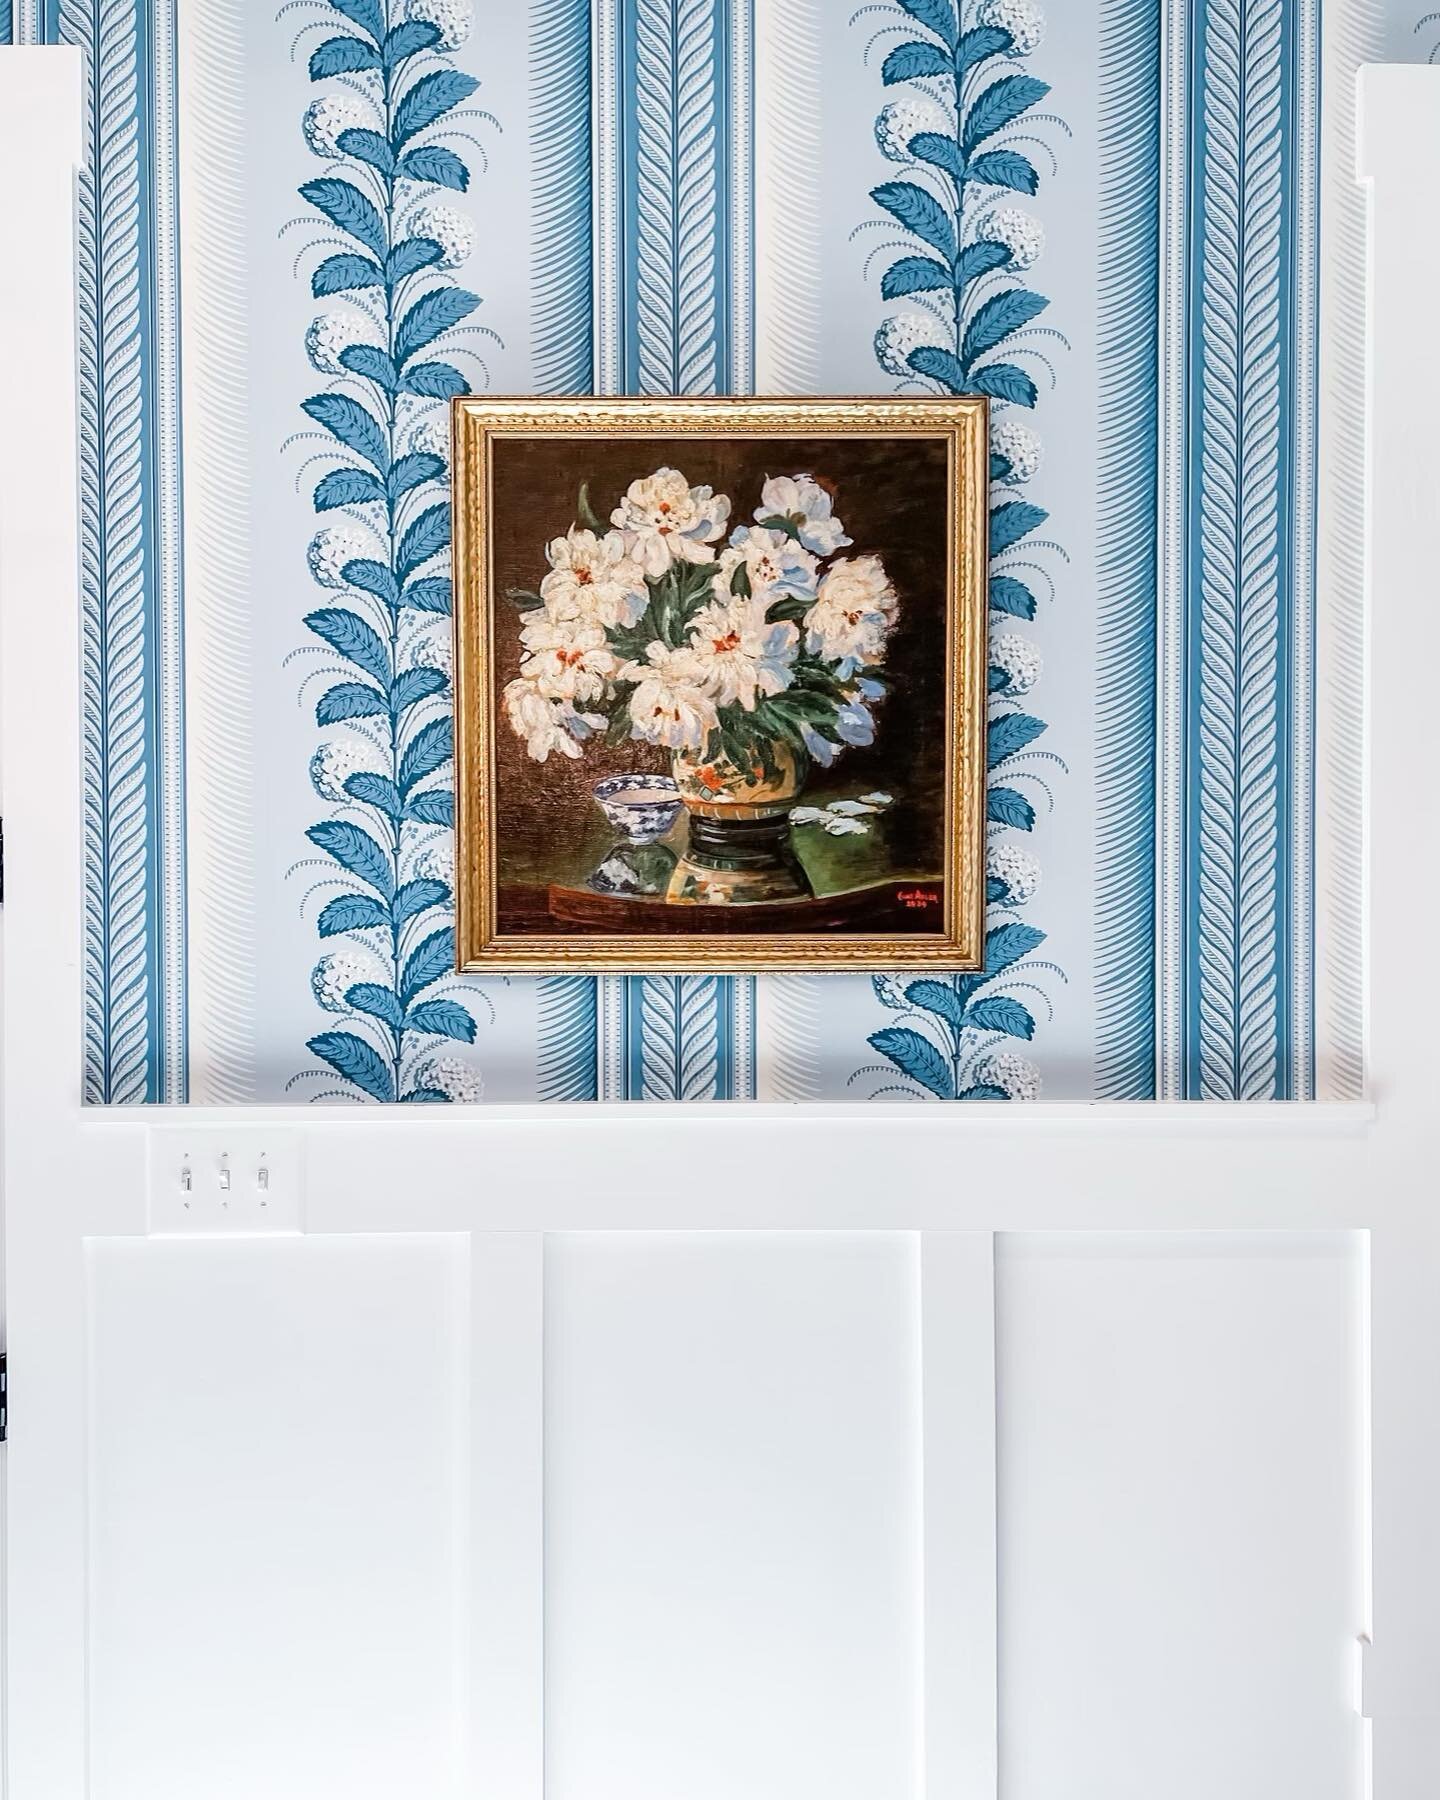 Latest install in a beautiful dining room 💙🍽 #lbwstudio #hydrangeadrape #blueandwhite #stripes #wallpaper #timeless